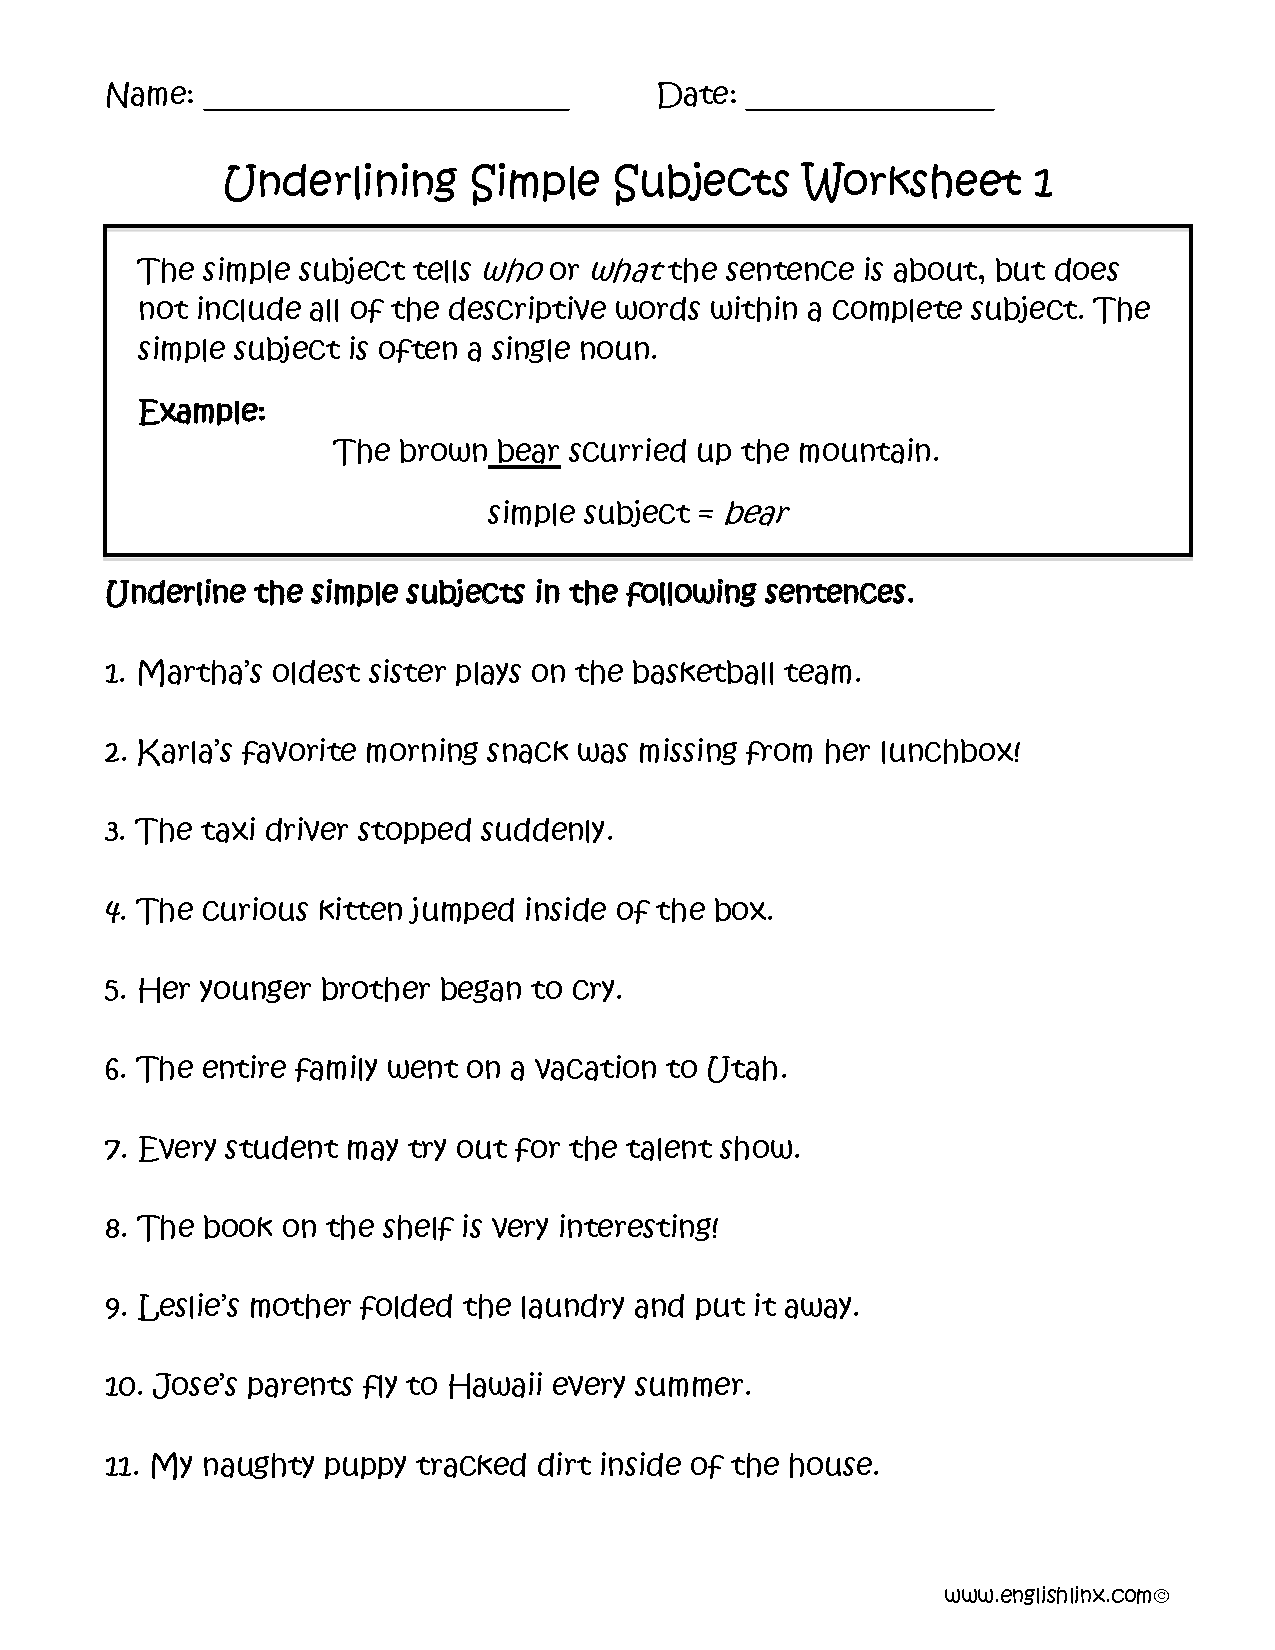 Underlining Simple Subject Worksheet